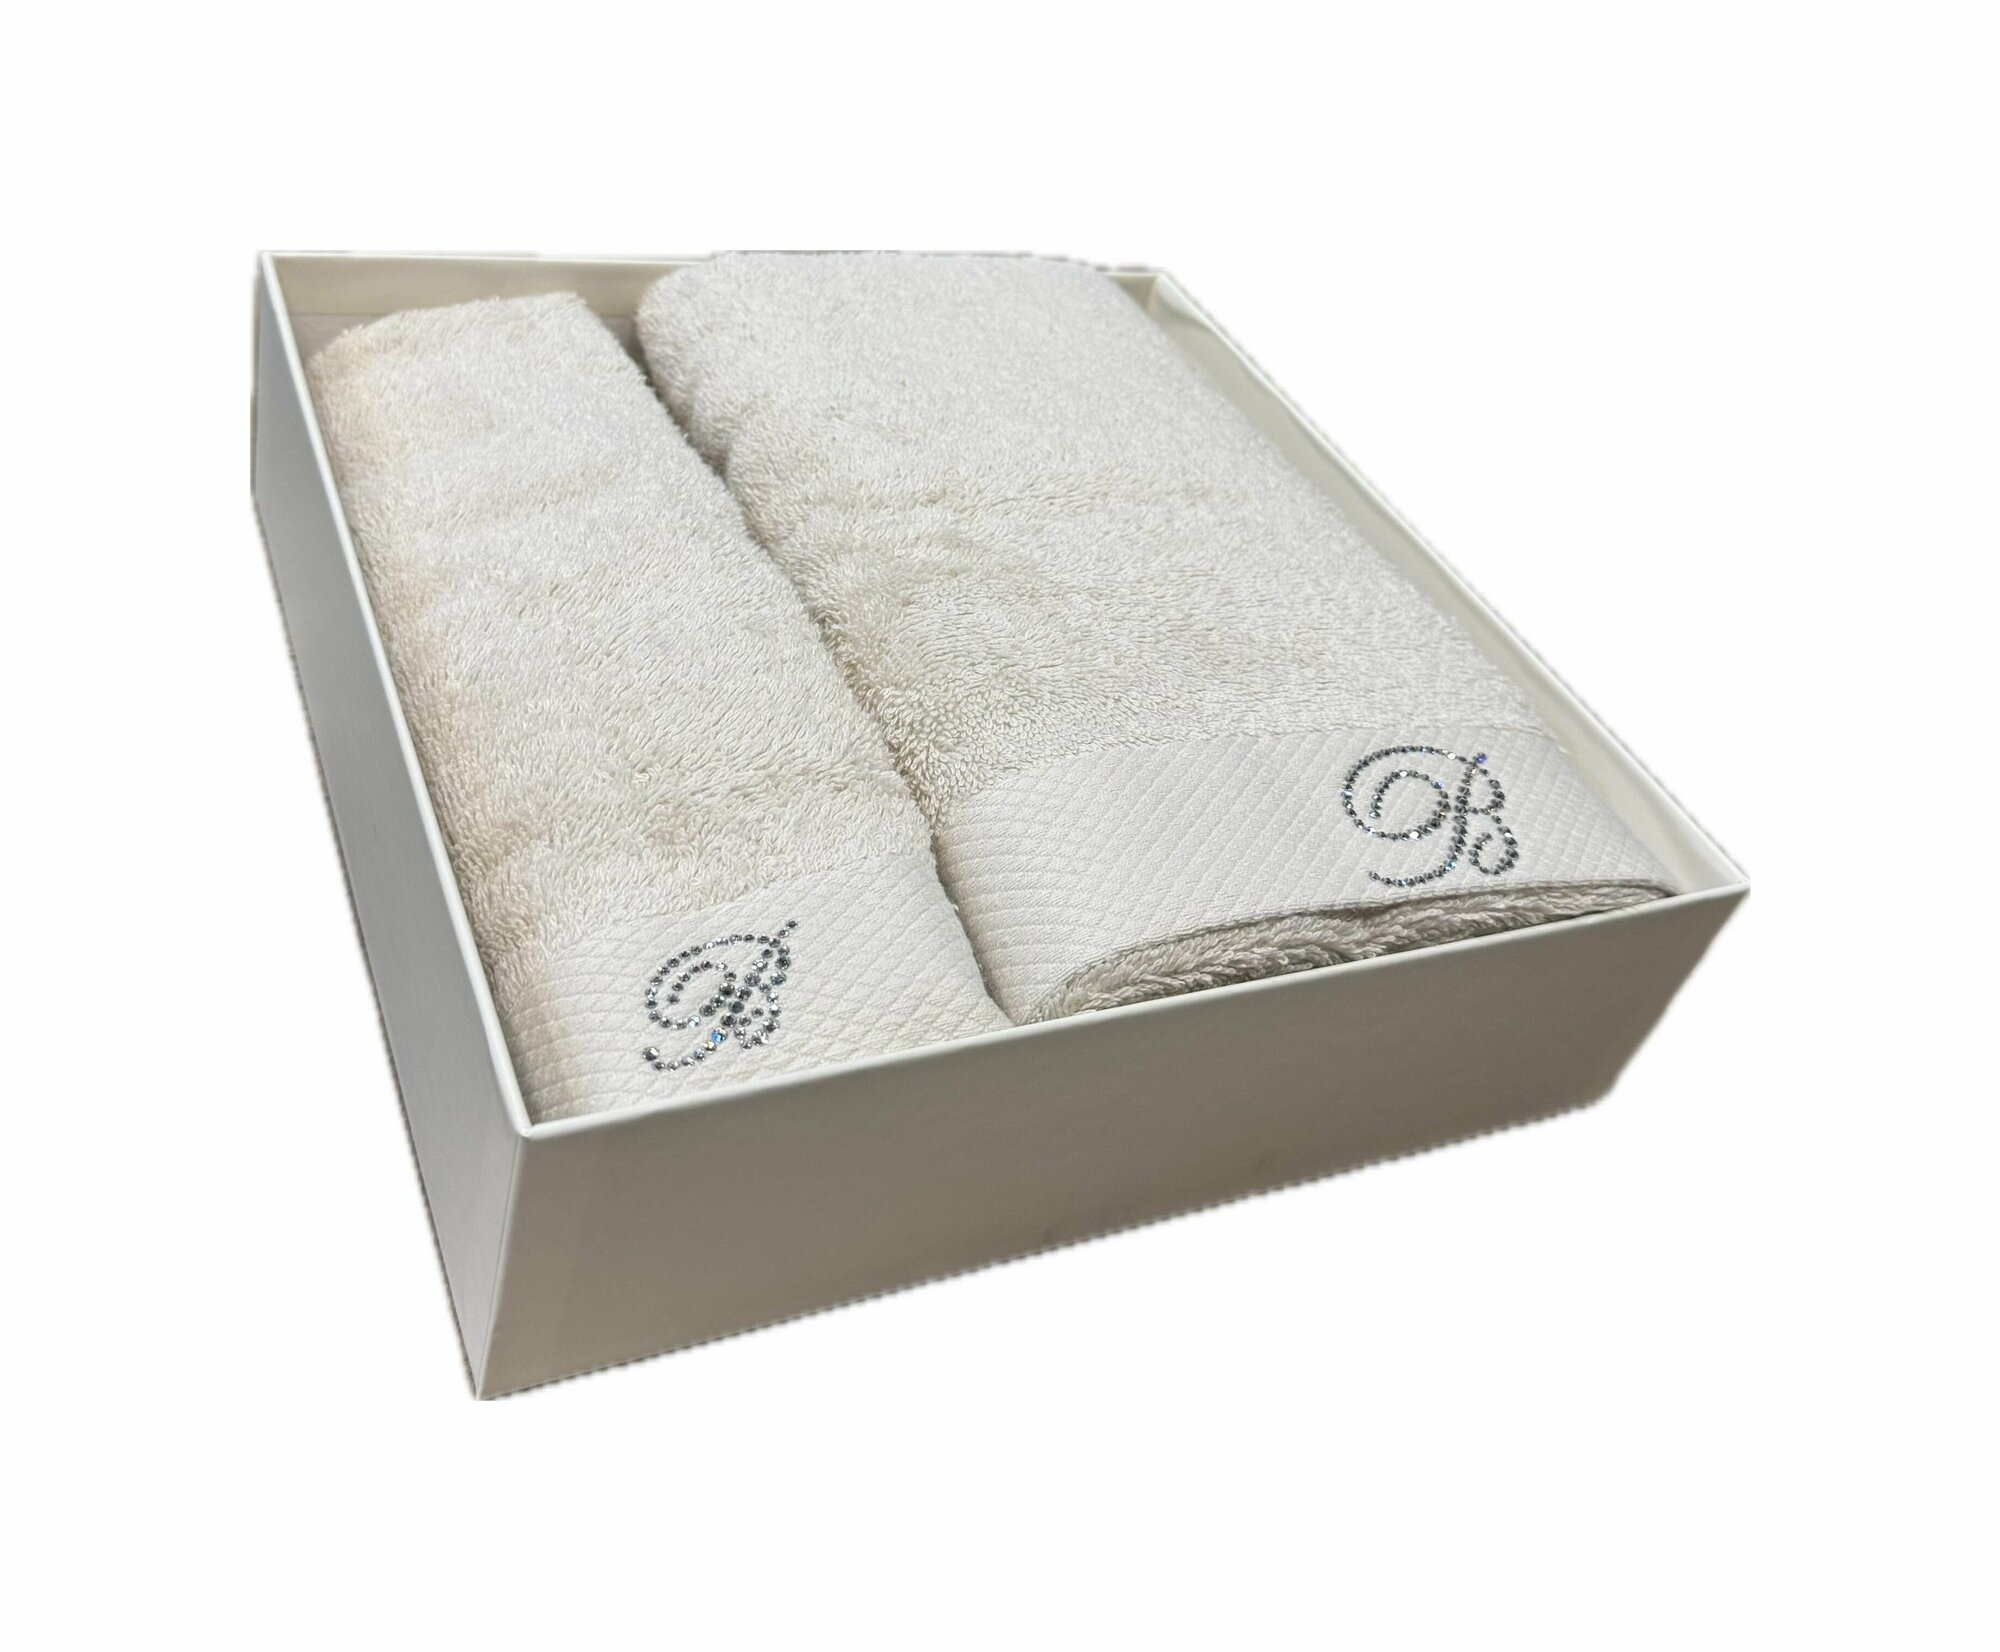 Blumarine home collection Benessere 1+1 сет полотенец в подарочной коробке